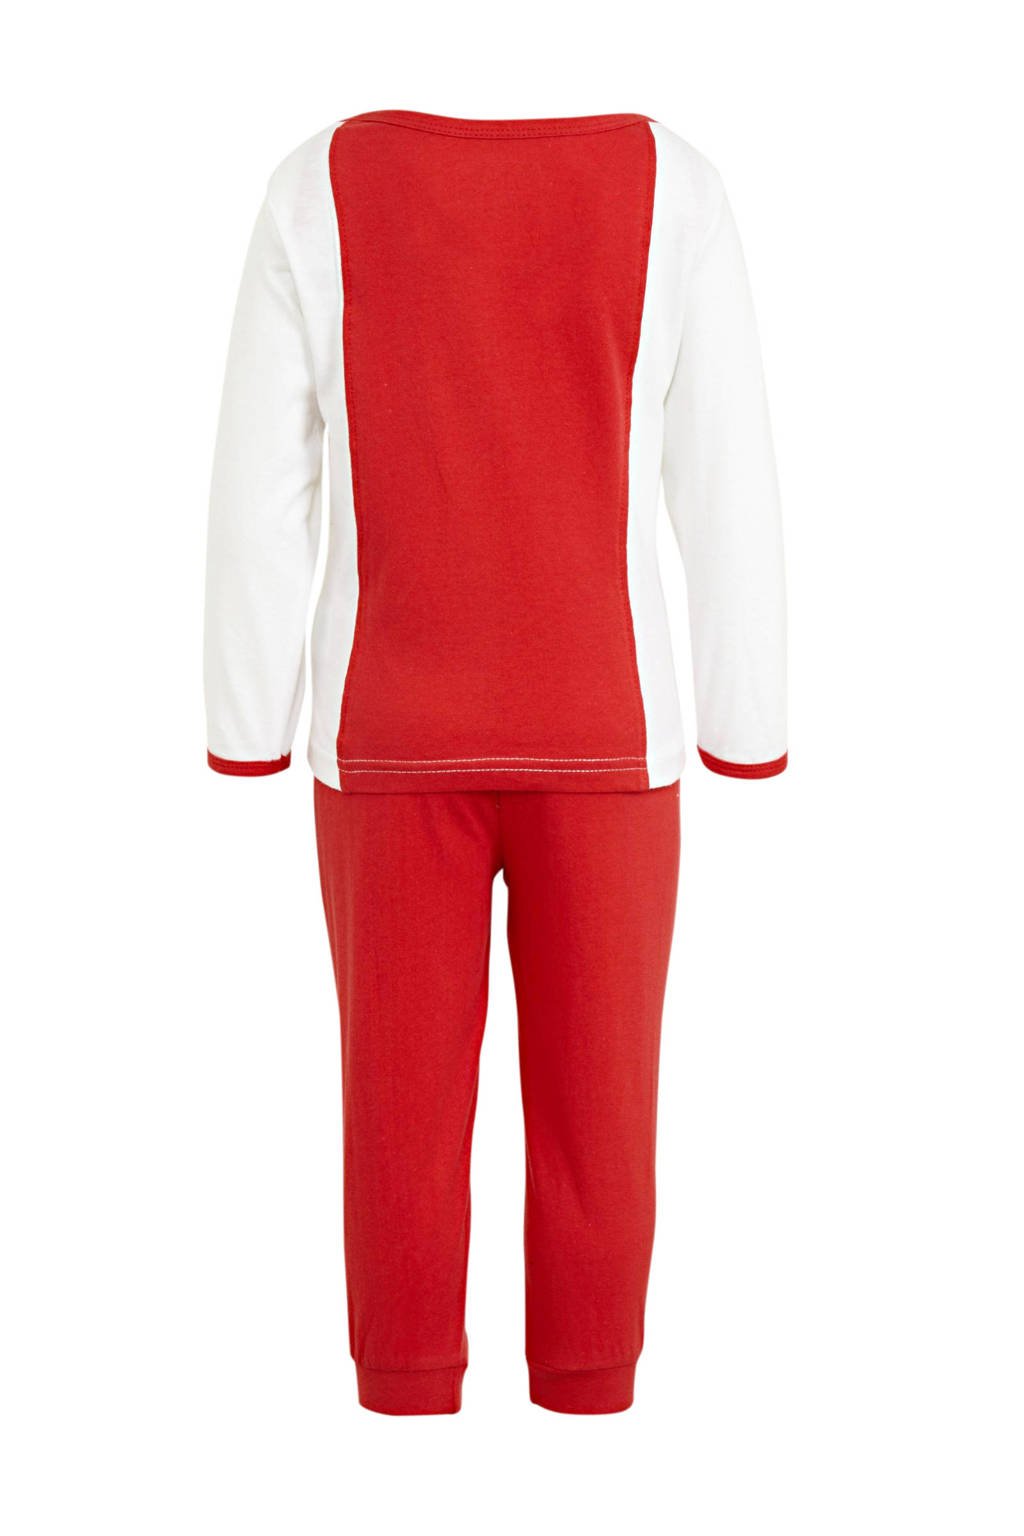 sigaar vrede Praktisch Ajax Ajax baby pyjama rood/wit | wehkamp